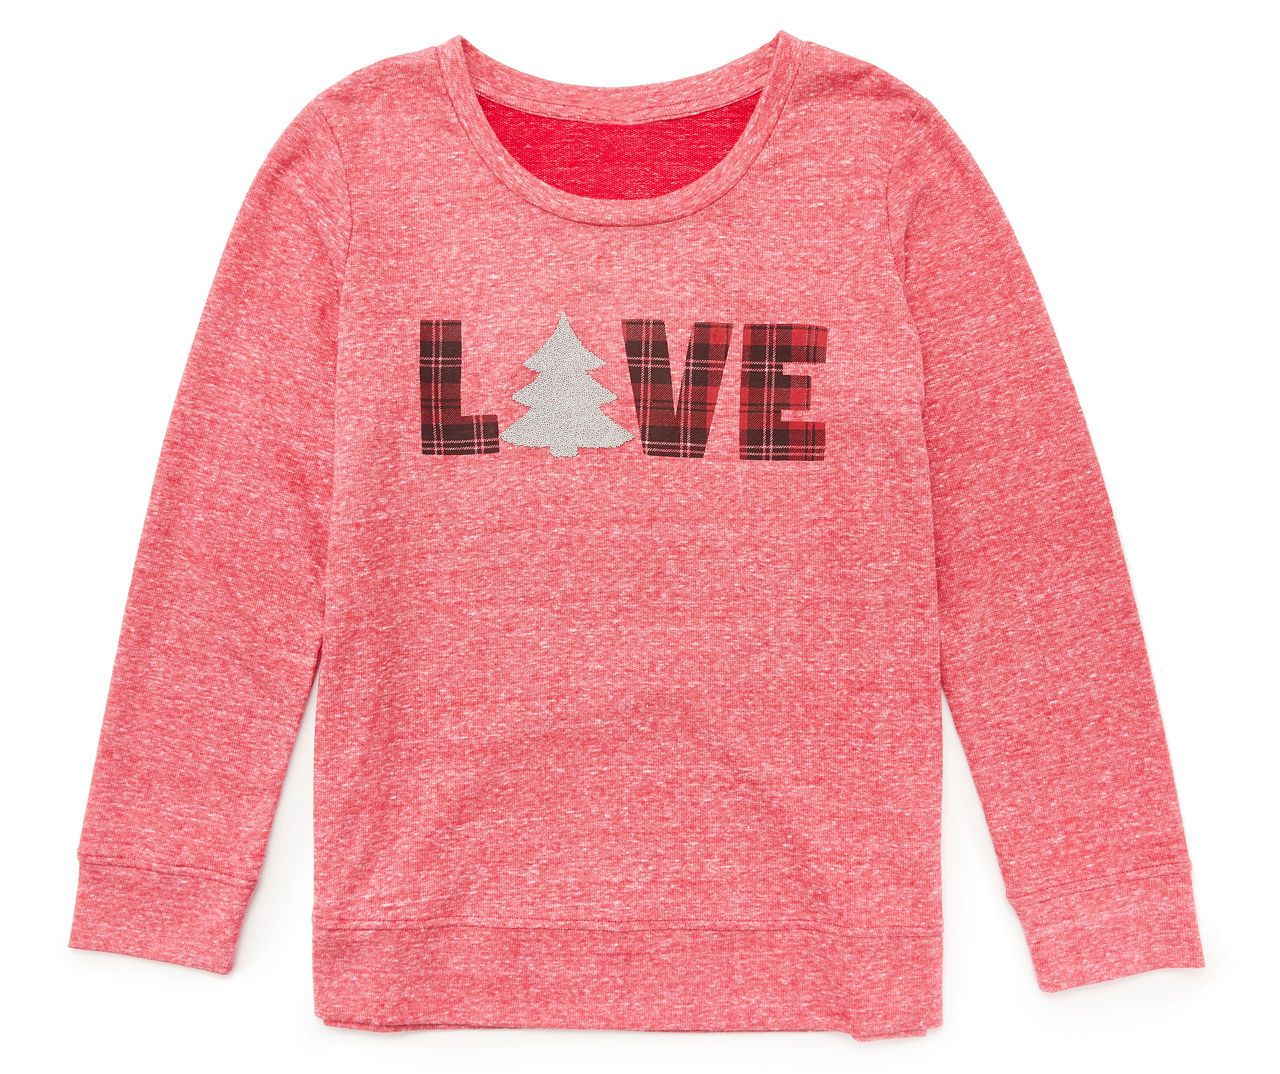 Women's Size 1X-Large "Love" Red Sweatshirt